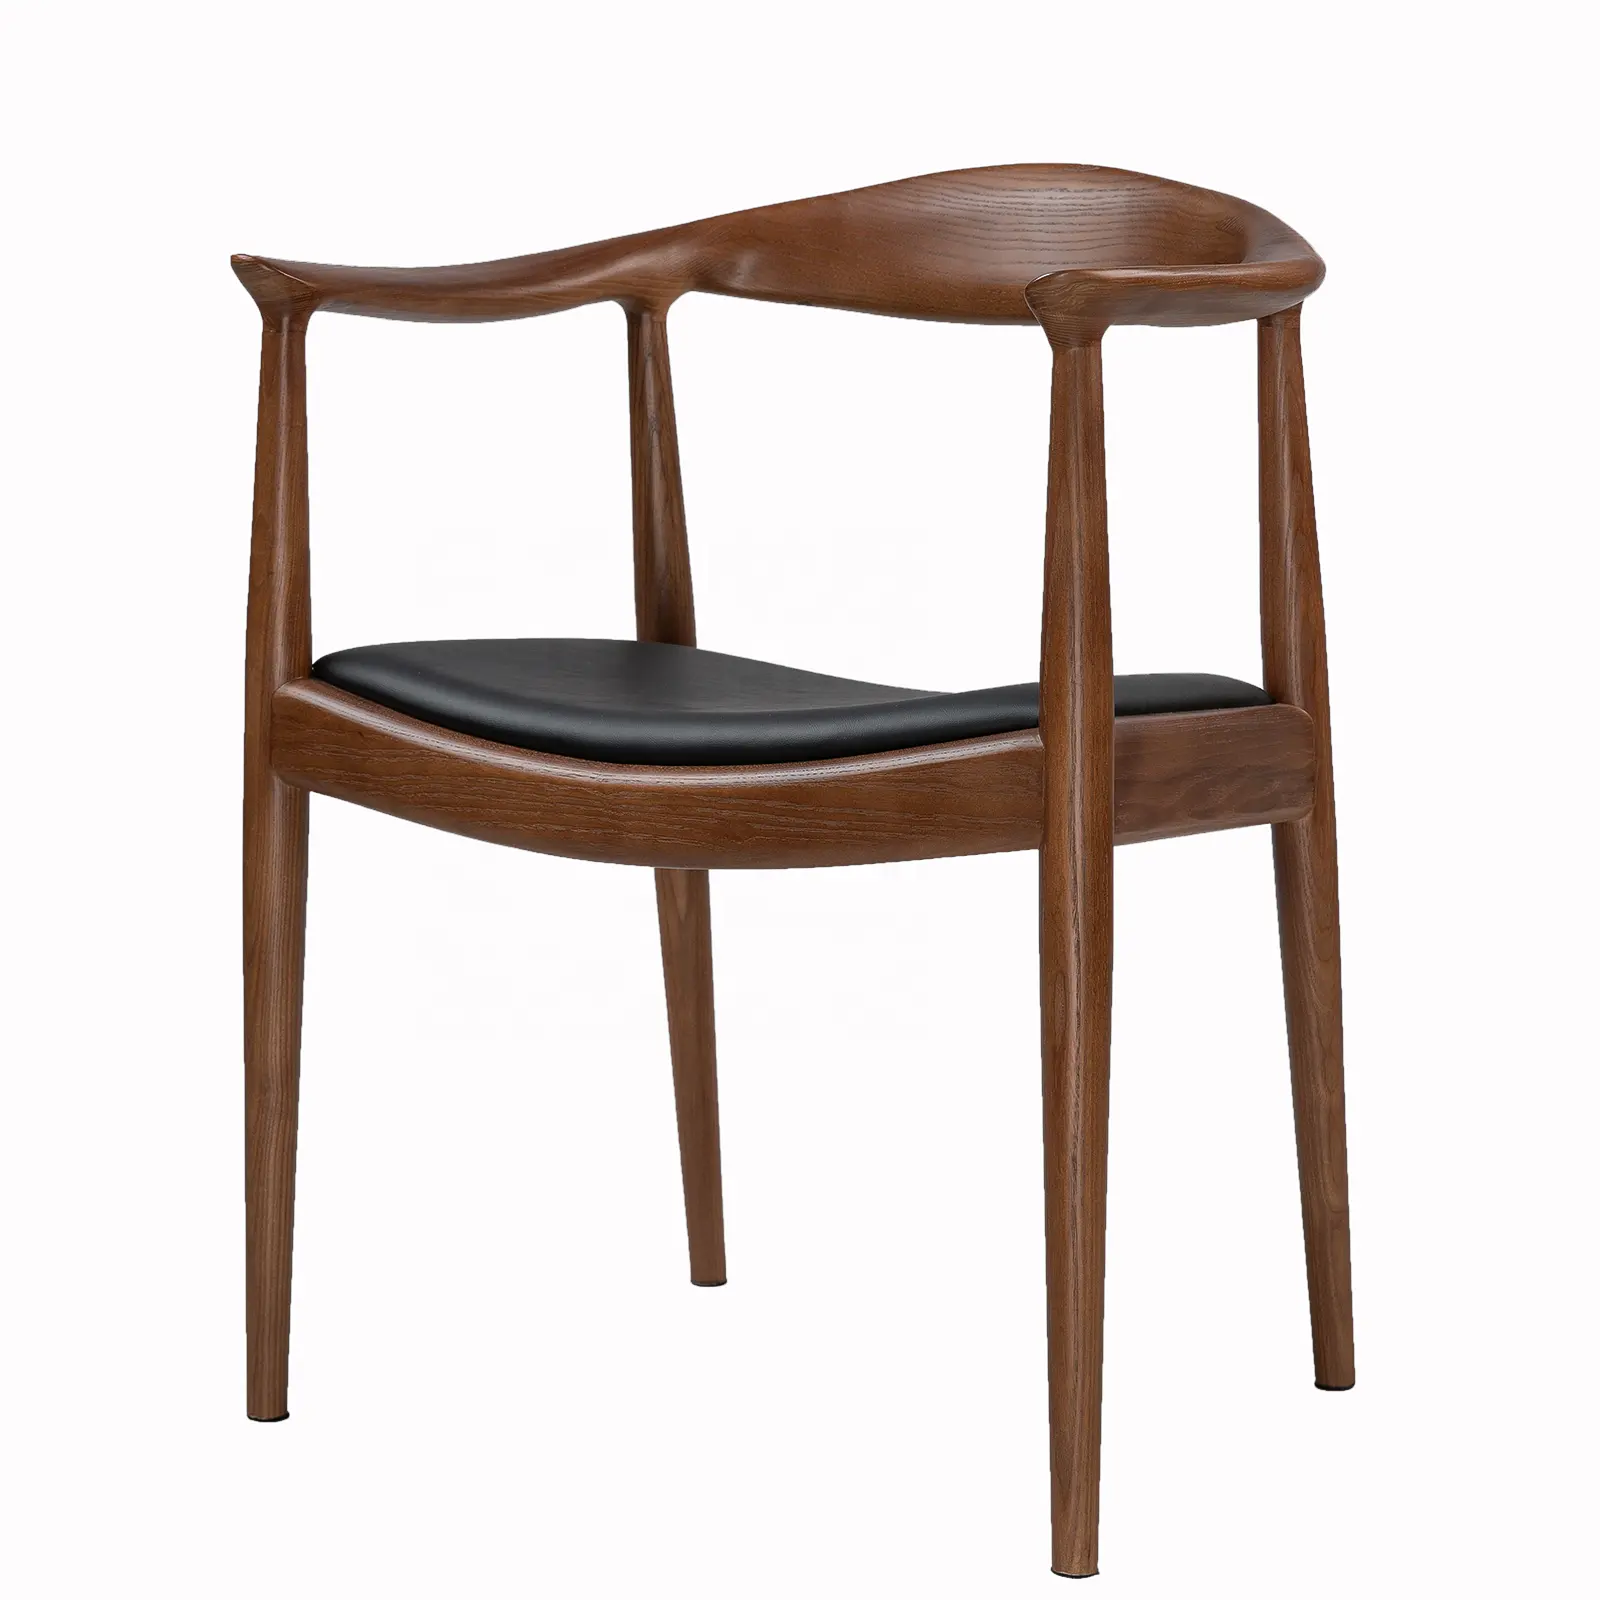 Modern Classic Sala de estar o kennedy dinning cadeira couro assento cadeira de madeira sólida wegner poltrona cadeira redonda